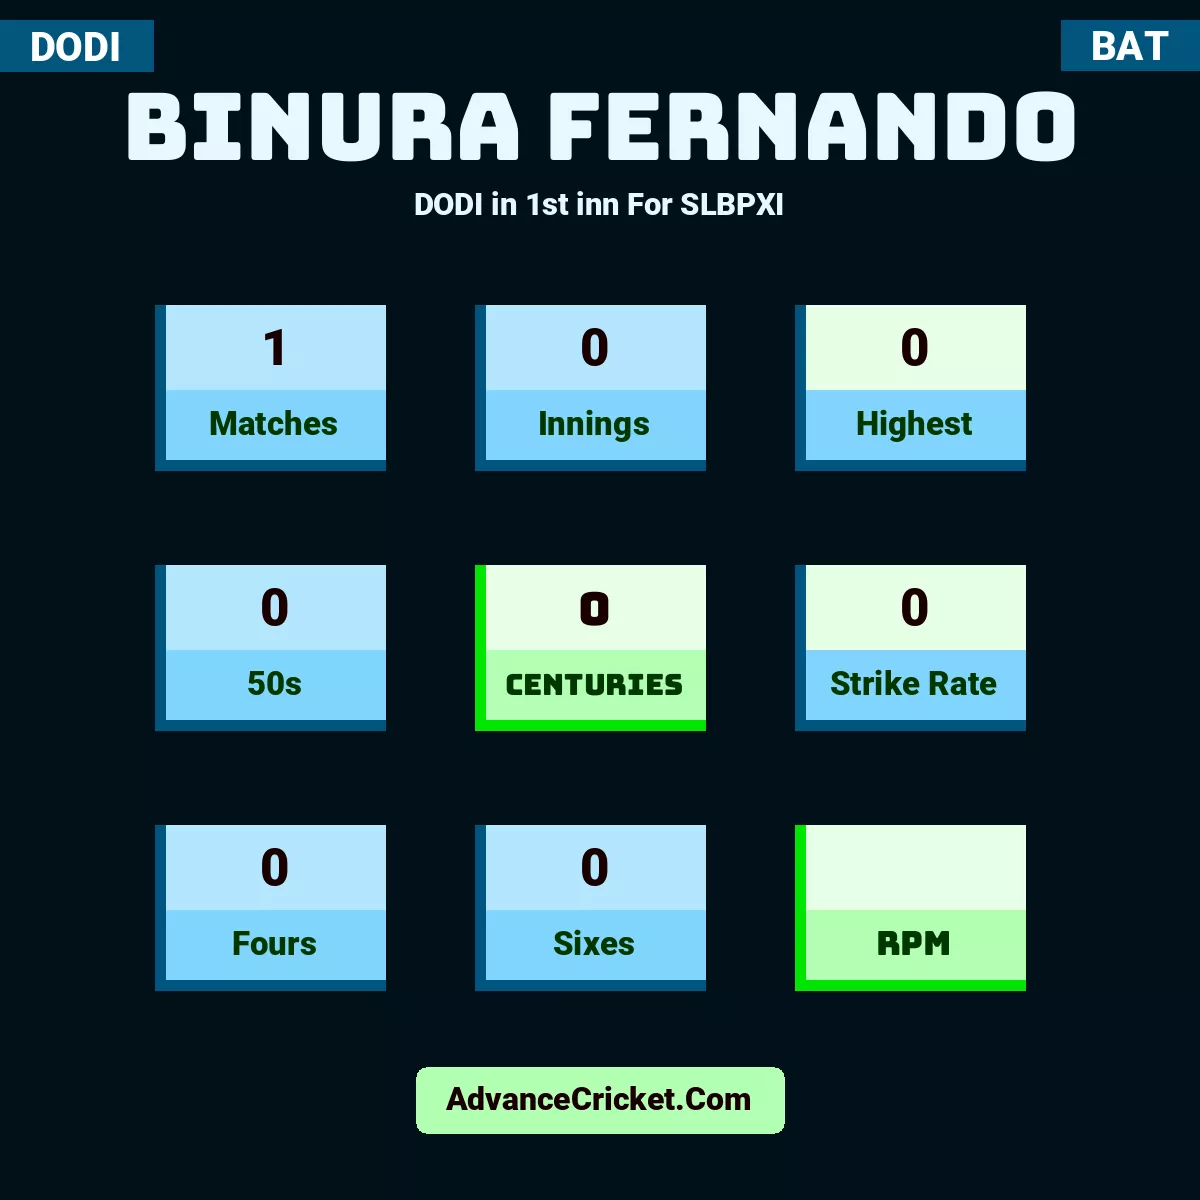 Binura Fernando DODI  in 1st inn For SLBPXI, Binura Fernando played 1 matches, scored 0 runs as highest, 0 half-centuries, and 0 centuries, with a strike rate of 0. B.Fernando hit 0 fours and 0 sixes.